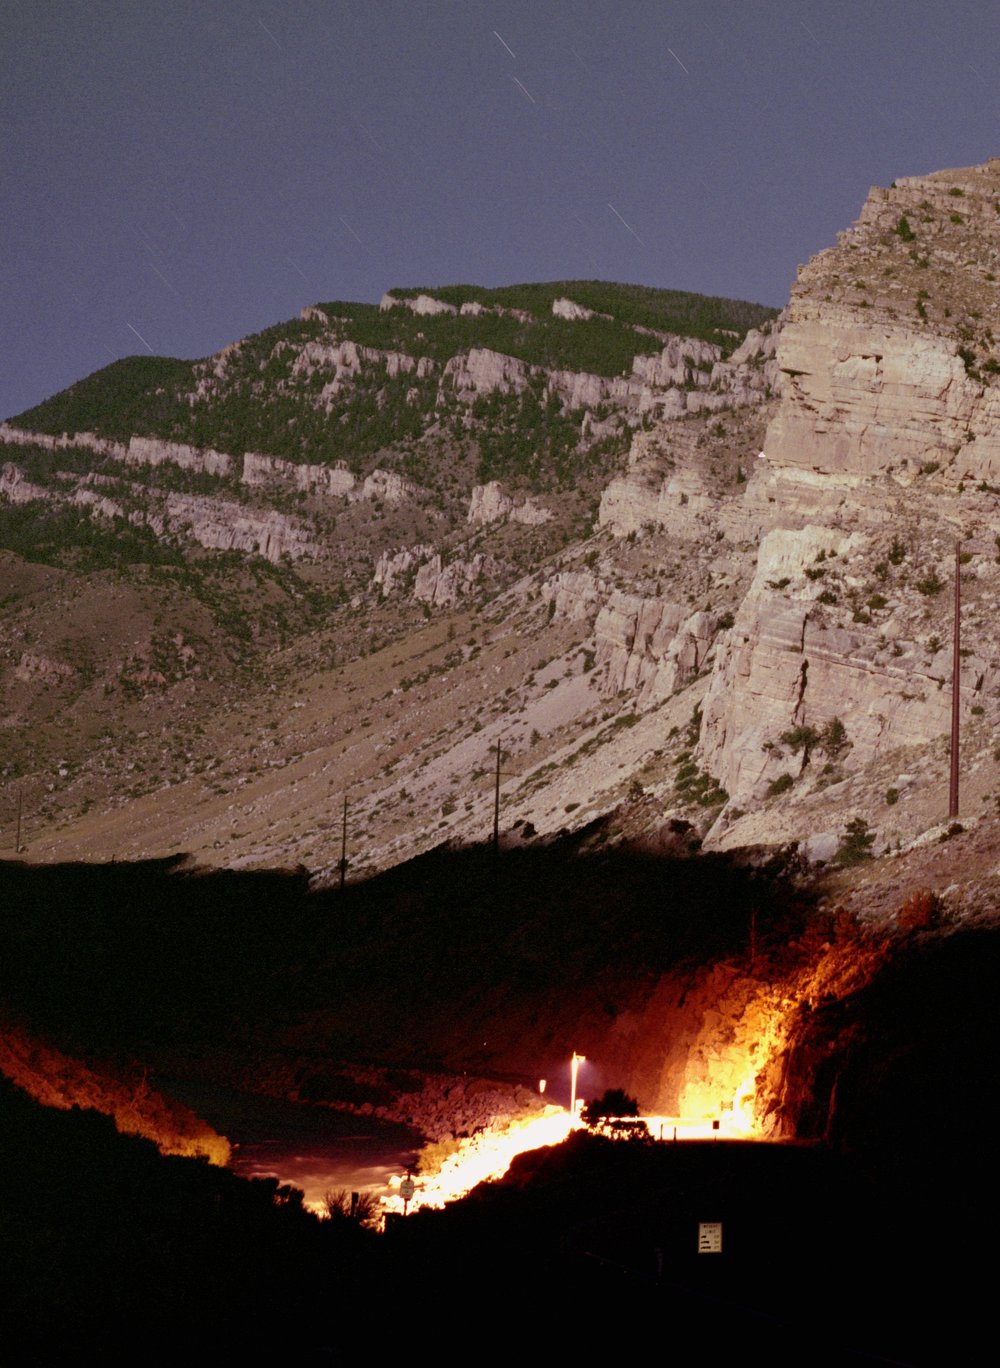 Image of moonlit gorge